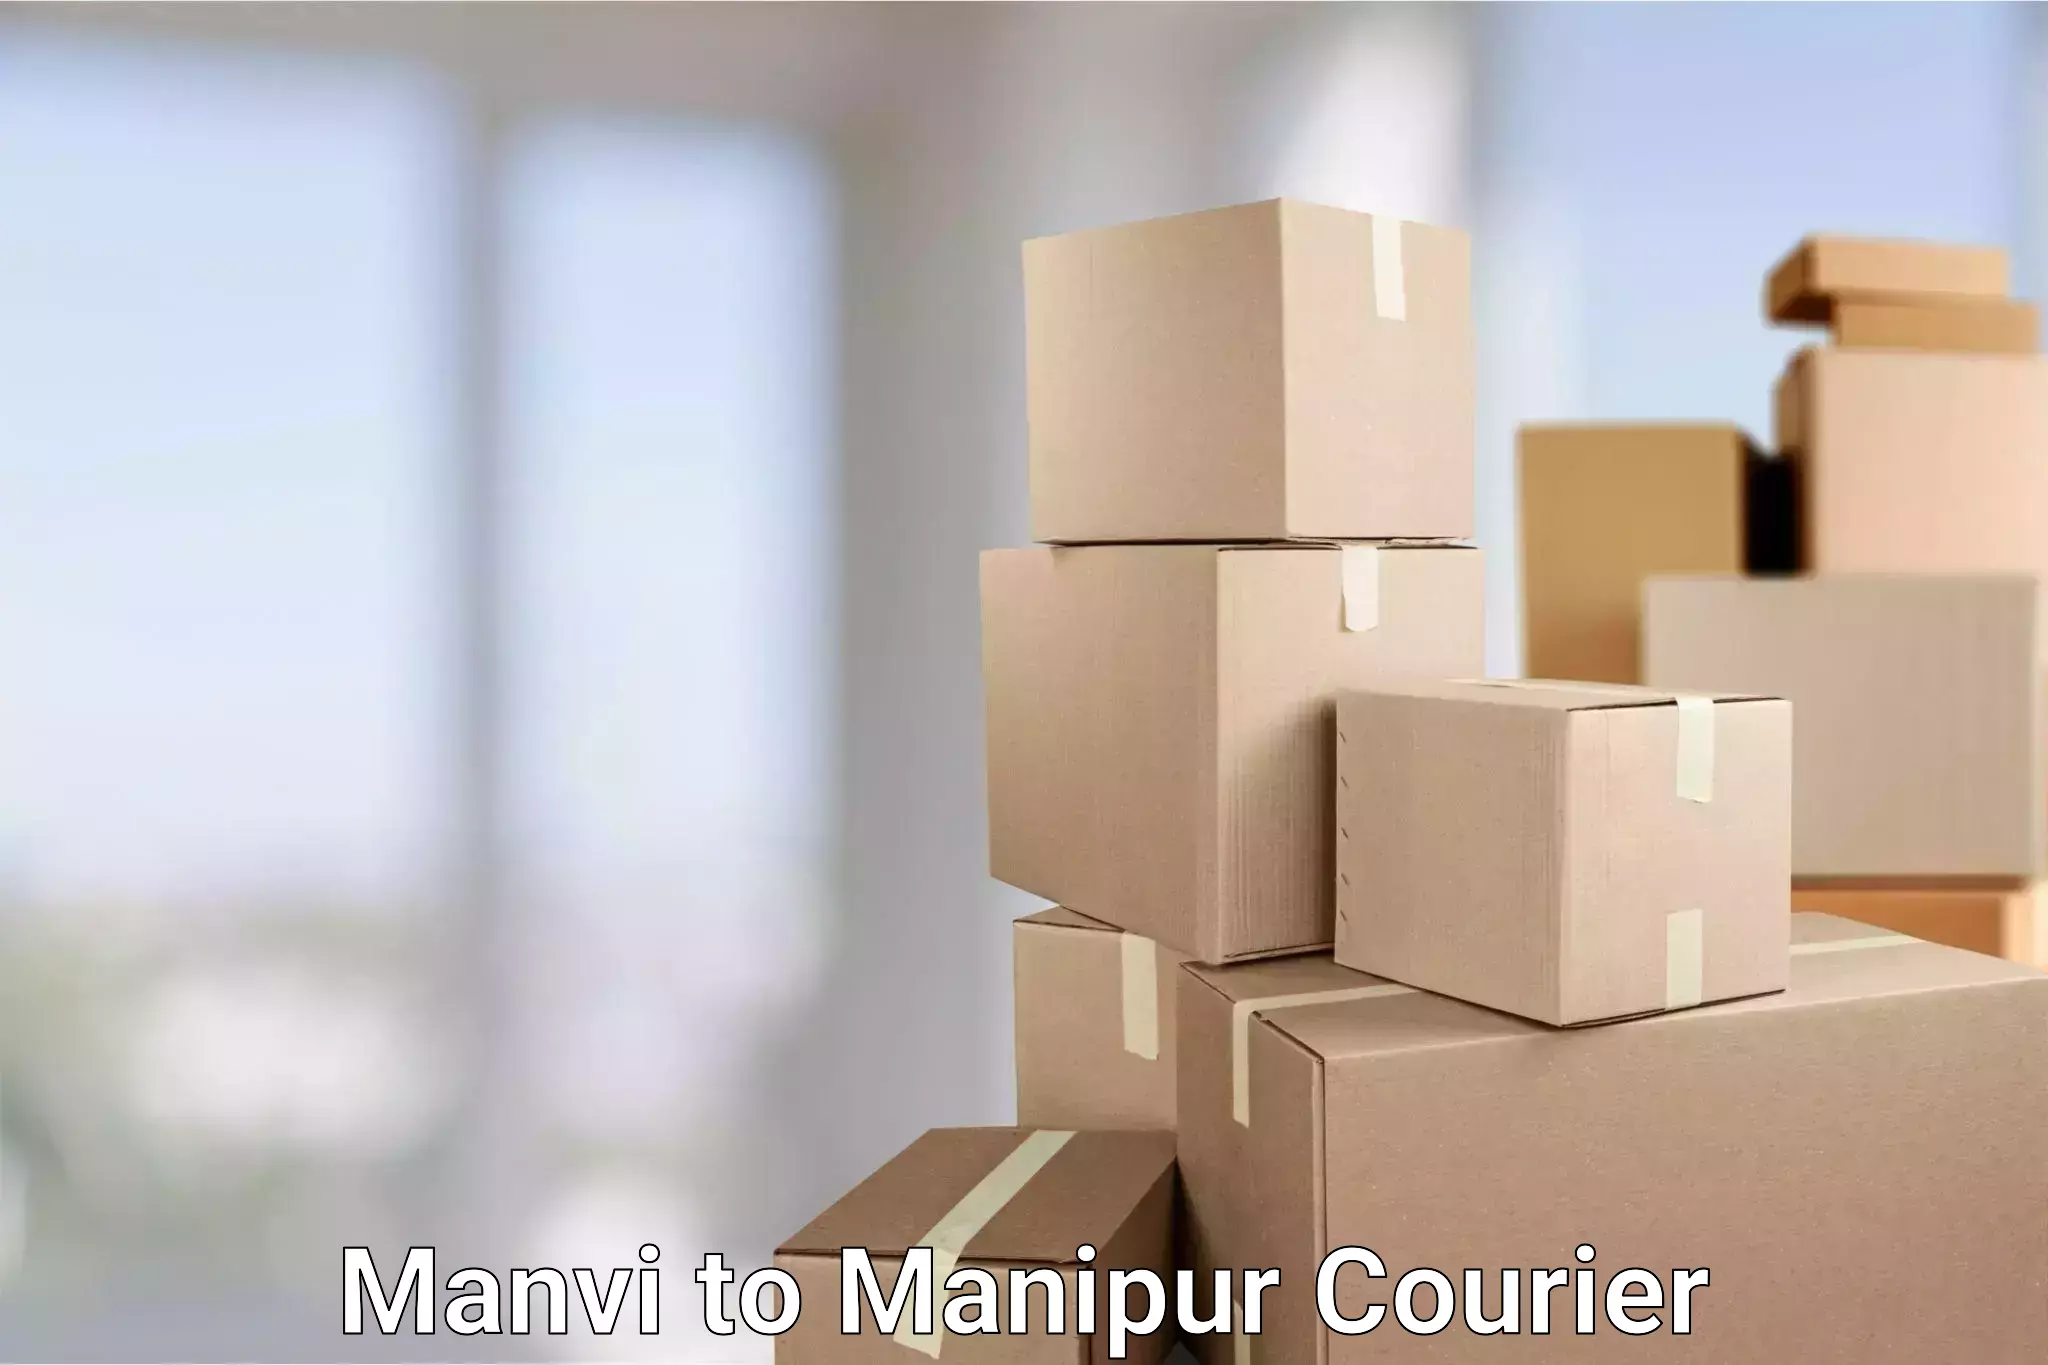 International courier networks Manvi to Chandel